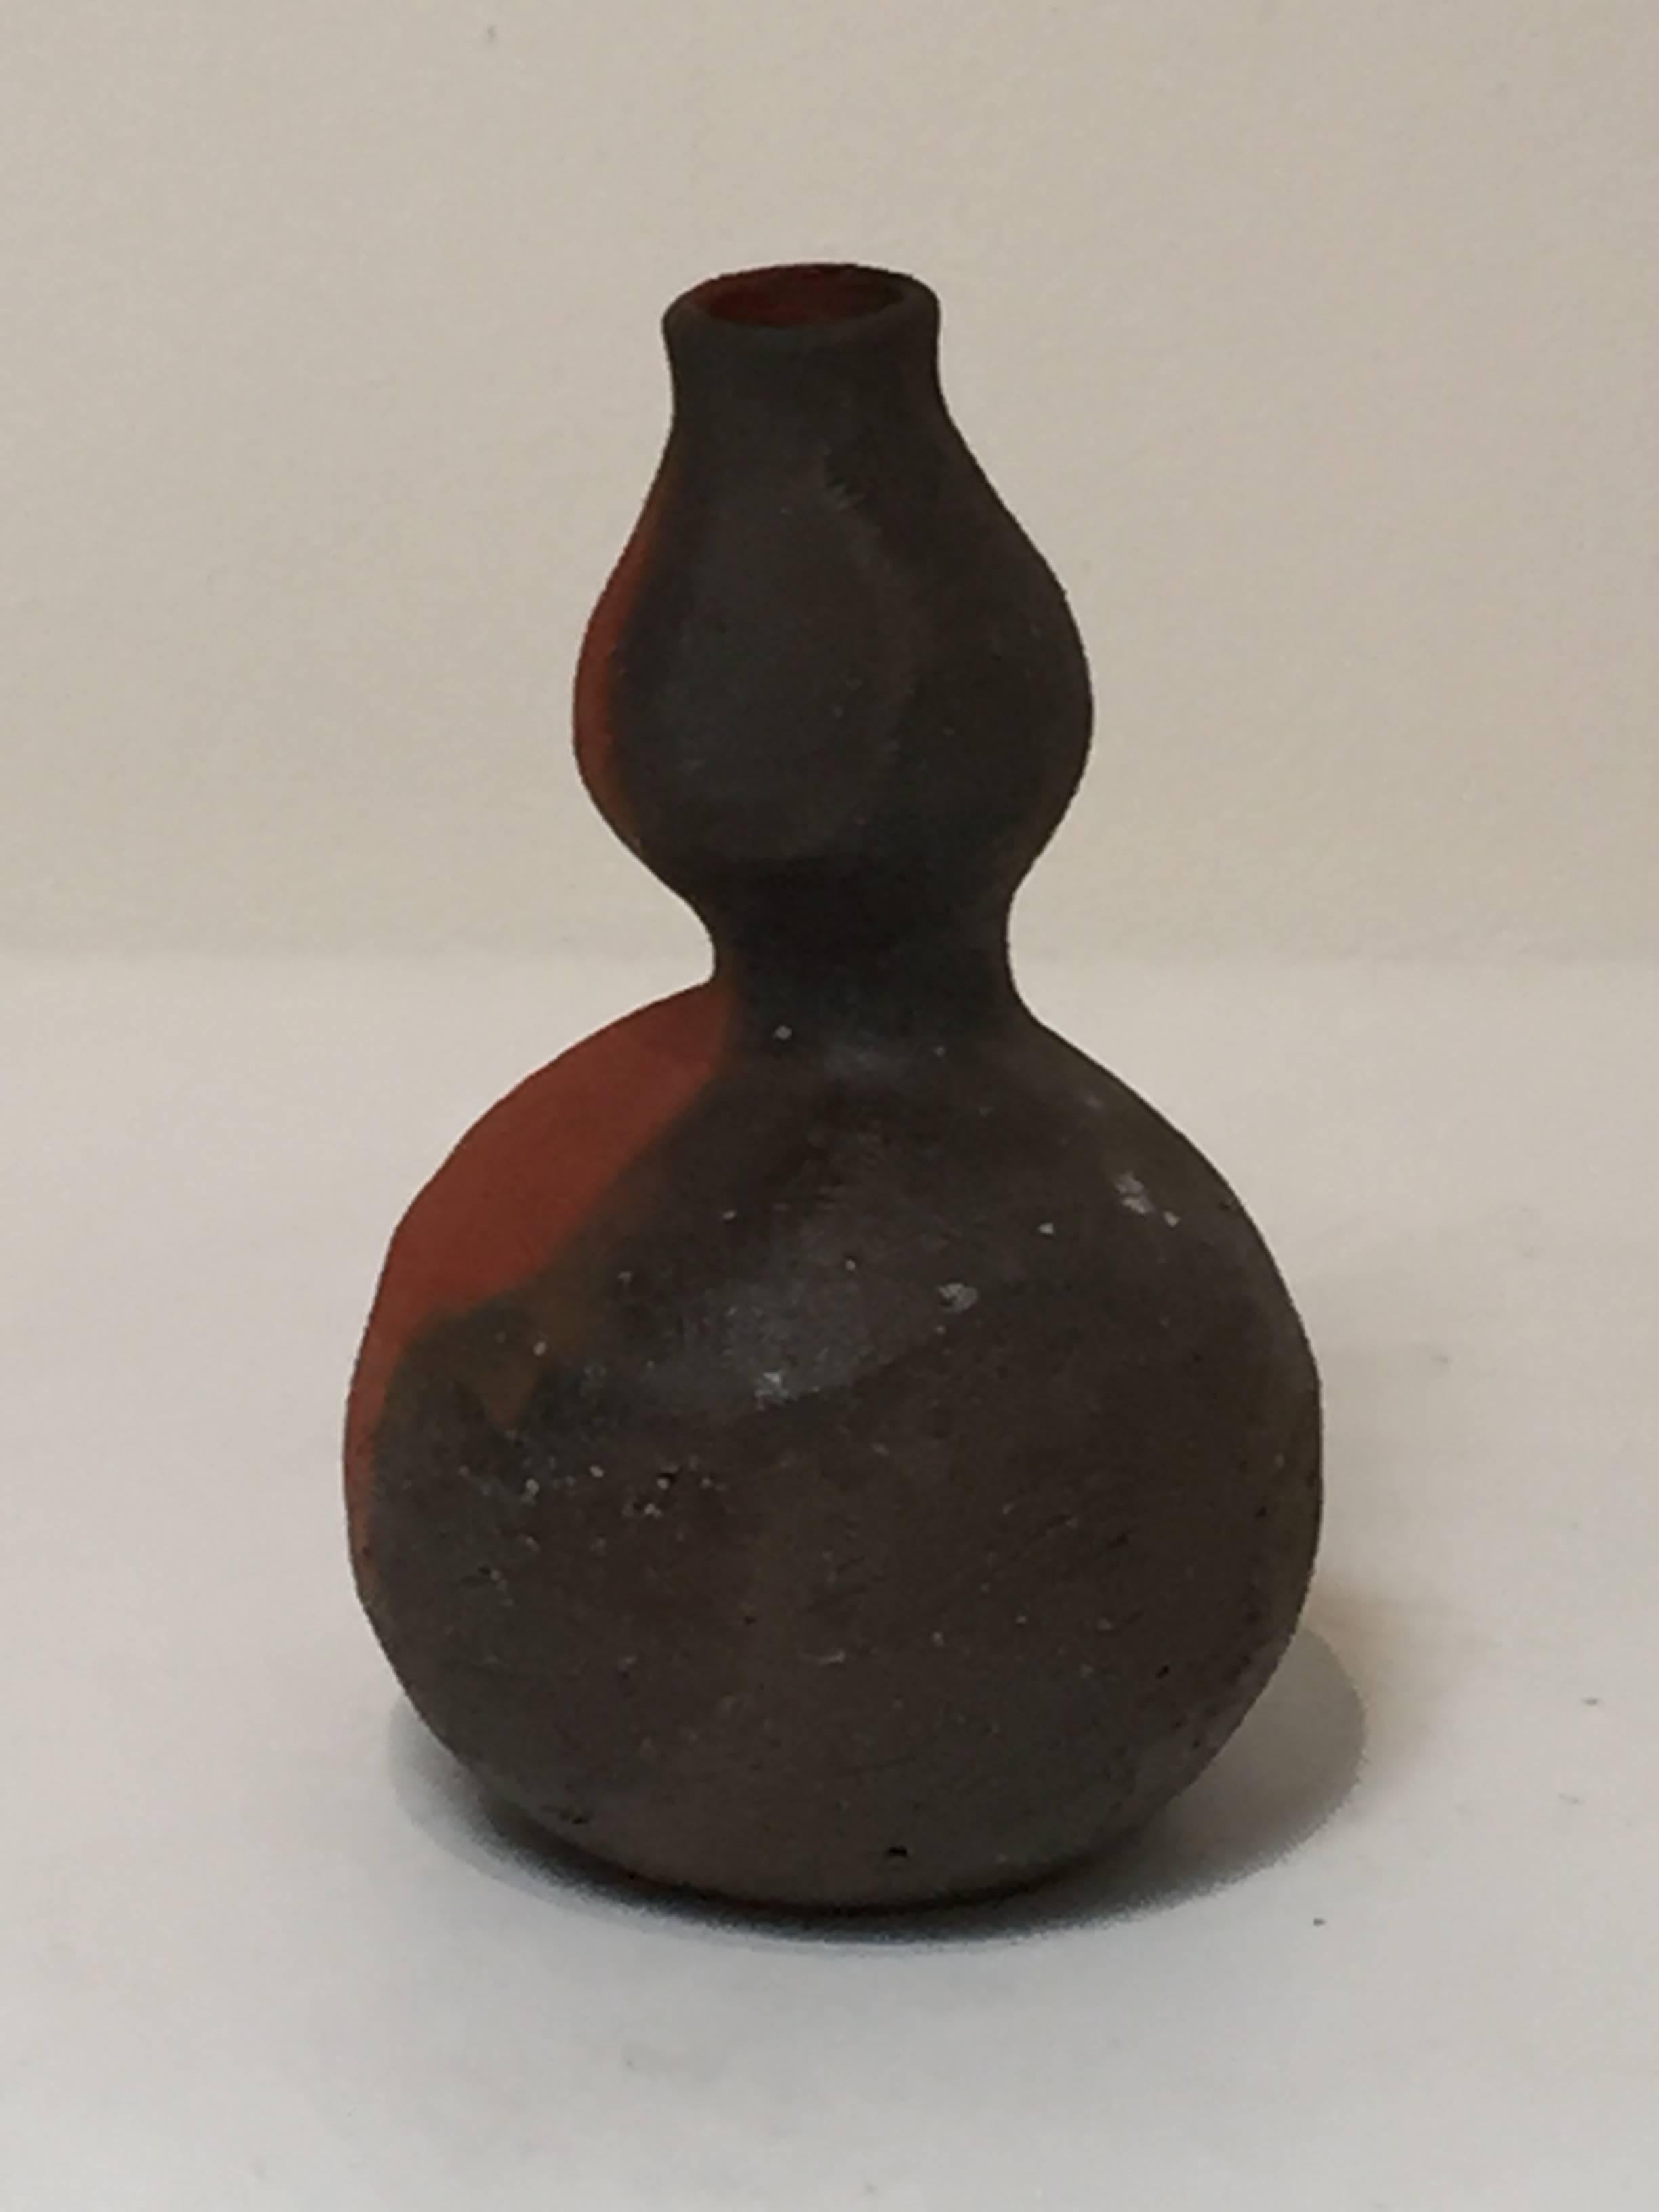 Ceramic Contemporary Sake Flask by Japanese Potter Osawa Tsuneo